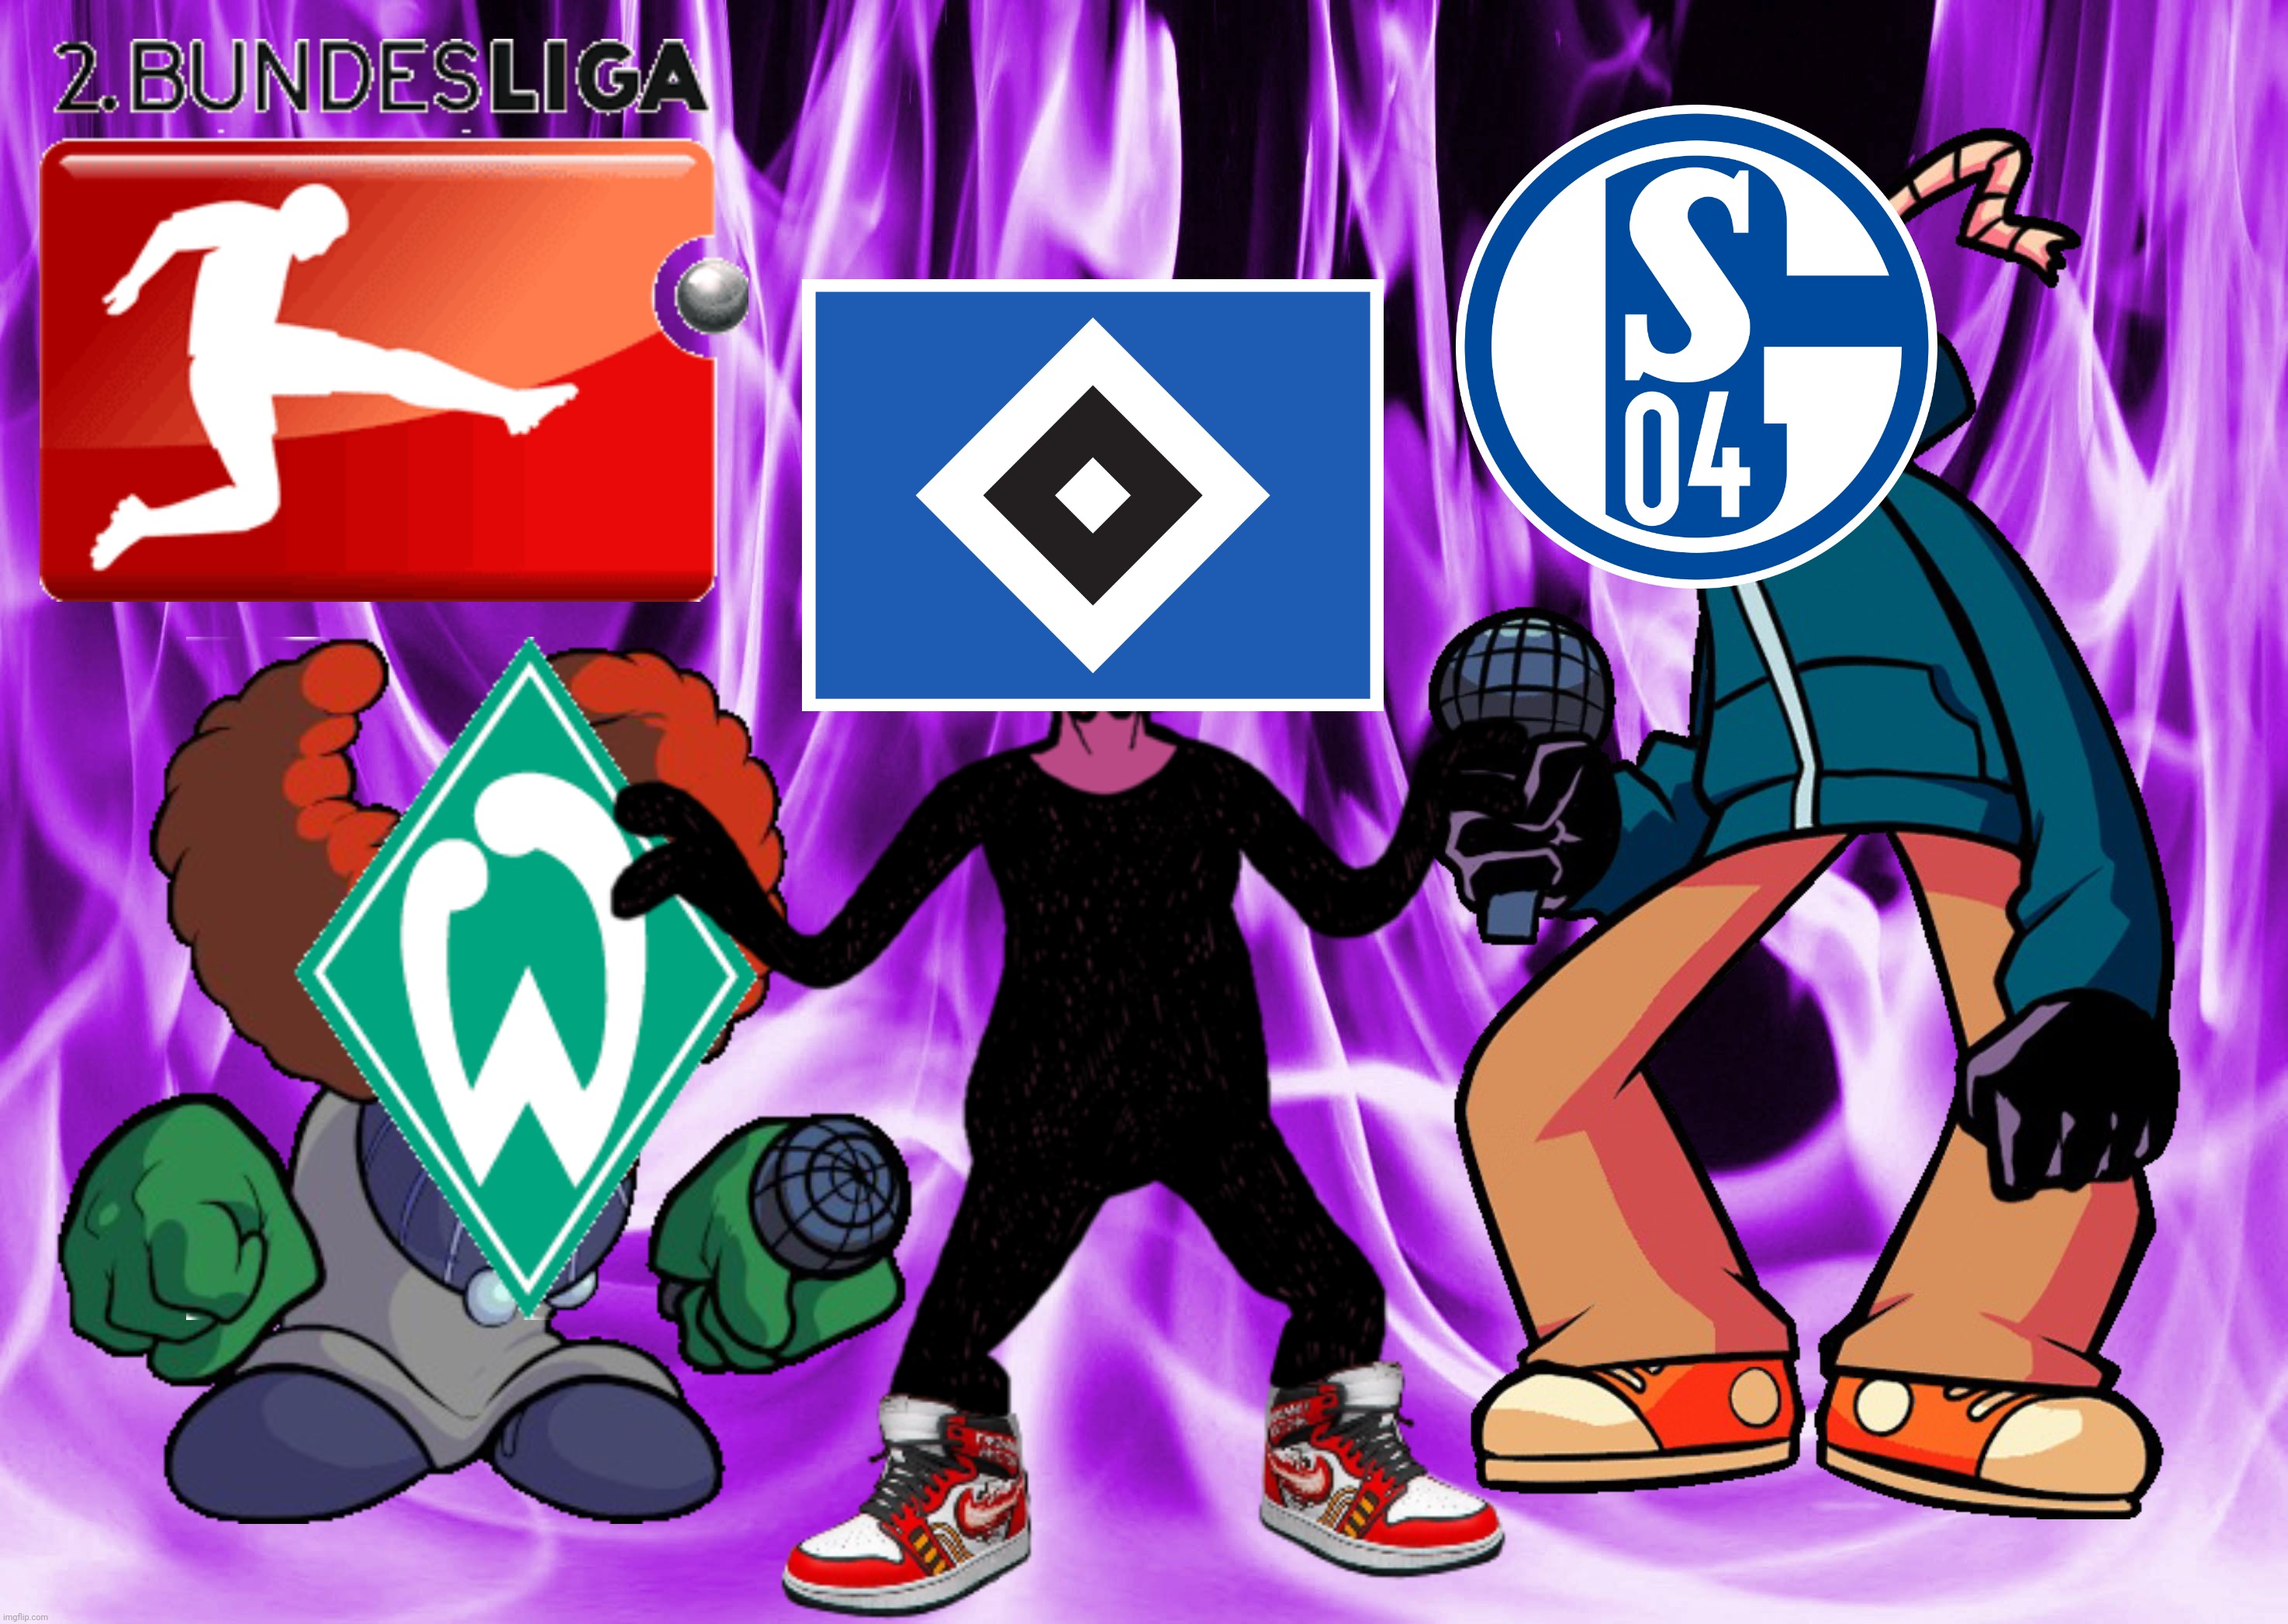 Bundesliga 2 for the next season would be lit! (FNF version) | image tagged in memes,bundesliga 2,werder bremen,hsv,schalke 04,friday night funkin | made w/ Imgflip meme maker